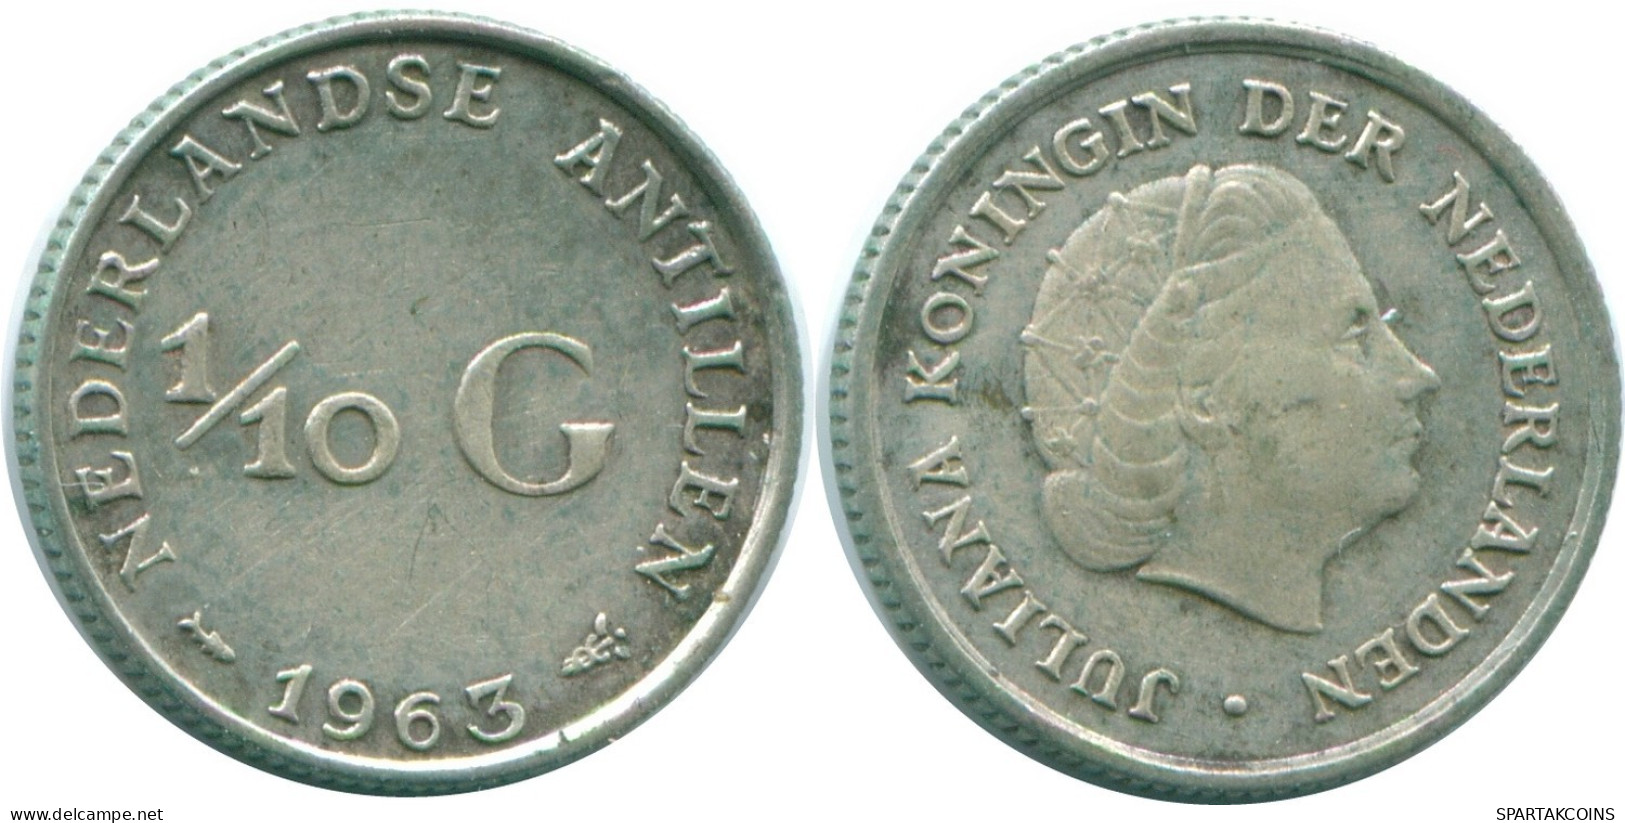 1/10 GULDEN 1963 NETHERLANDS ANTILLES SILVER Colonial Coin #NL12581.3.U.A - Antilles Néerlandaises